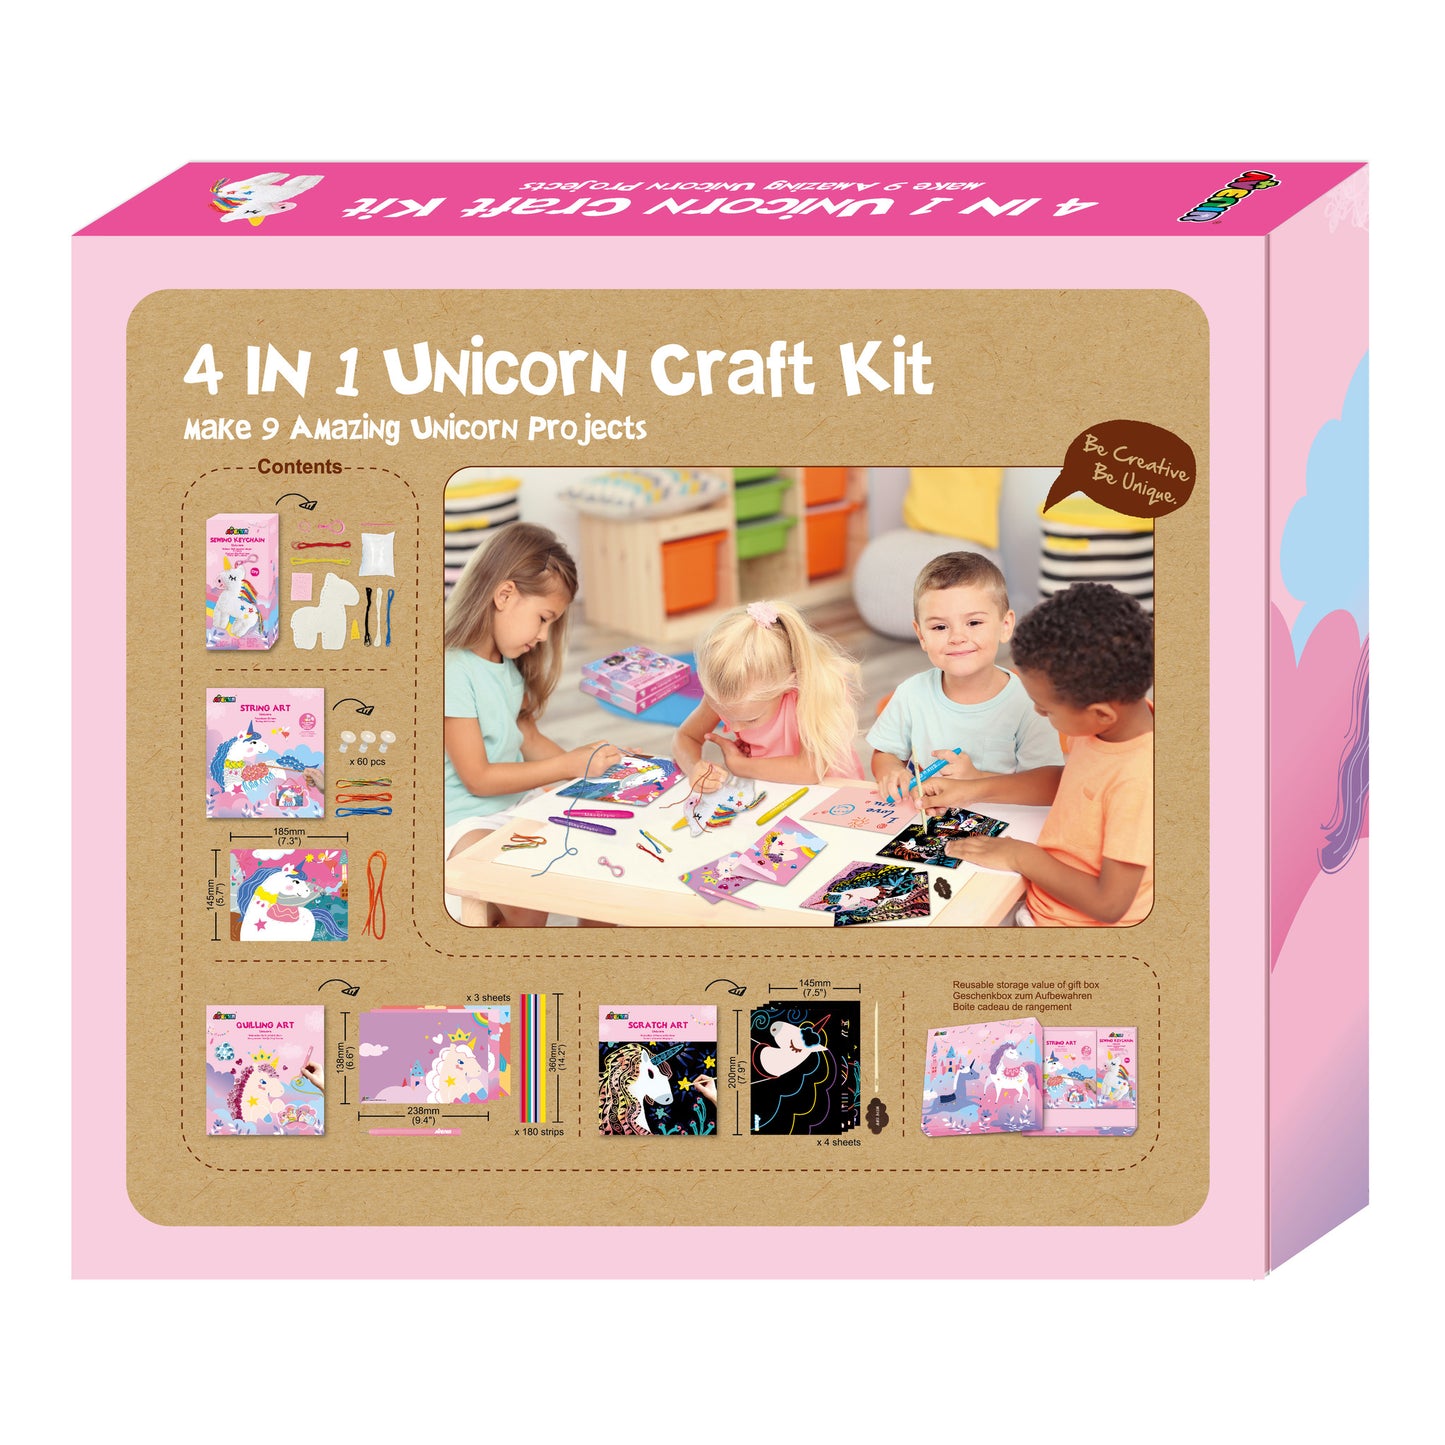 4 in 1 Unicorn Craft Kit